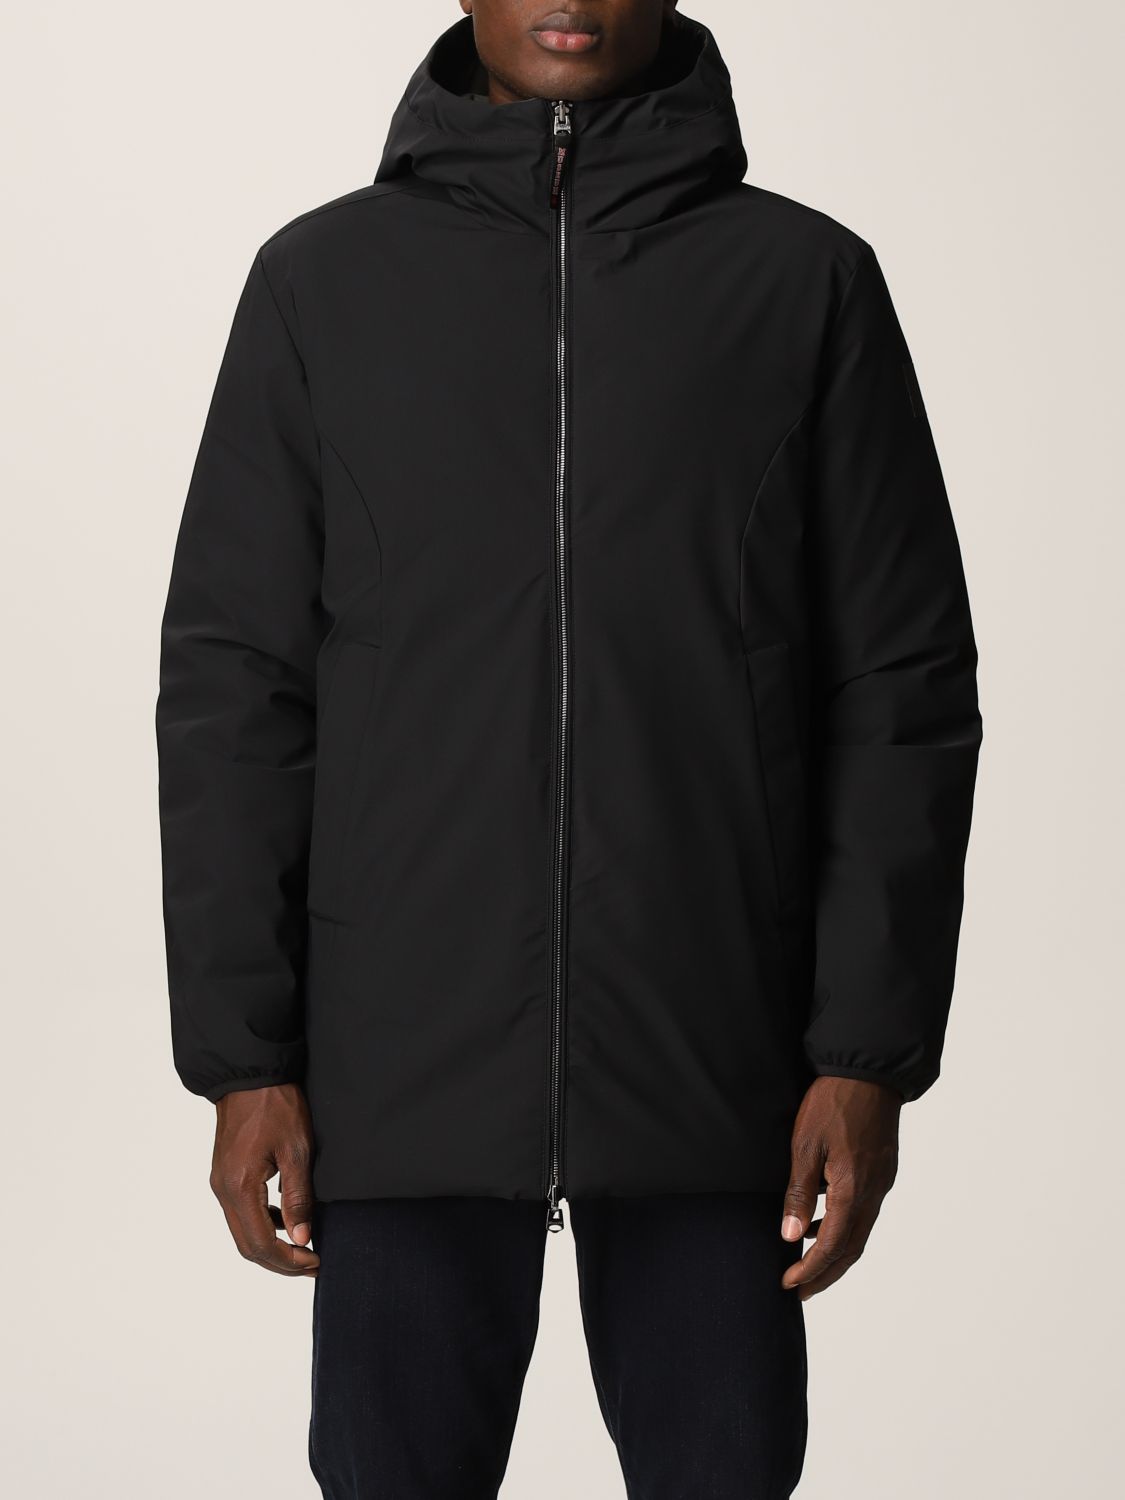 MUSEUM: jacket for man - Black | Museum jacket JA10 NY968 online on ...